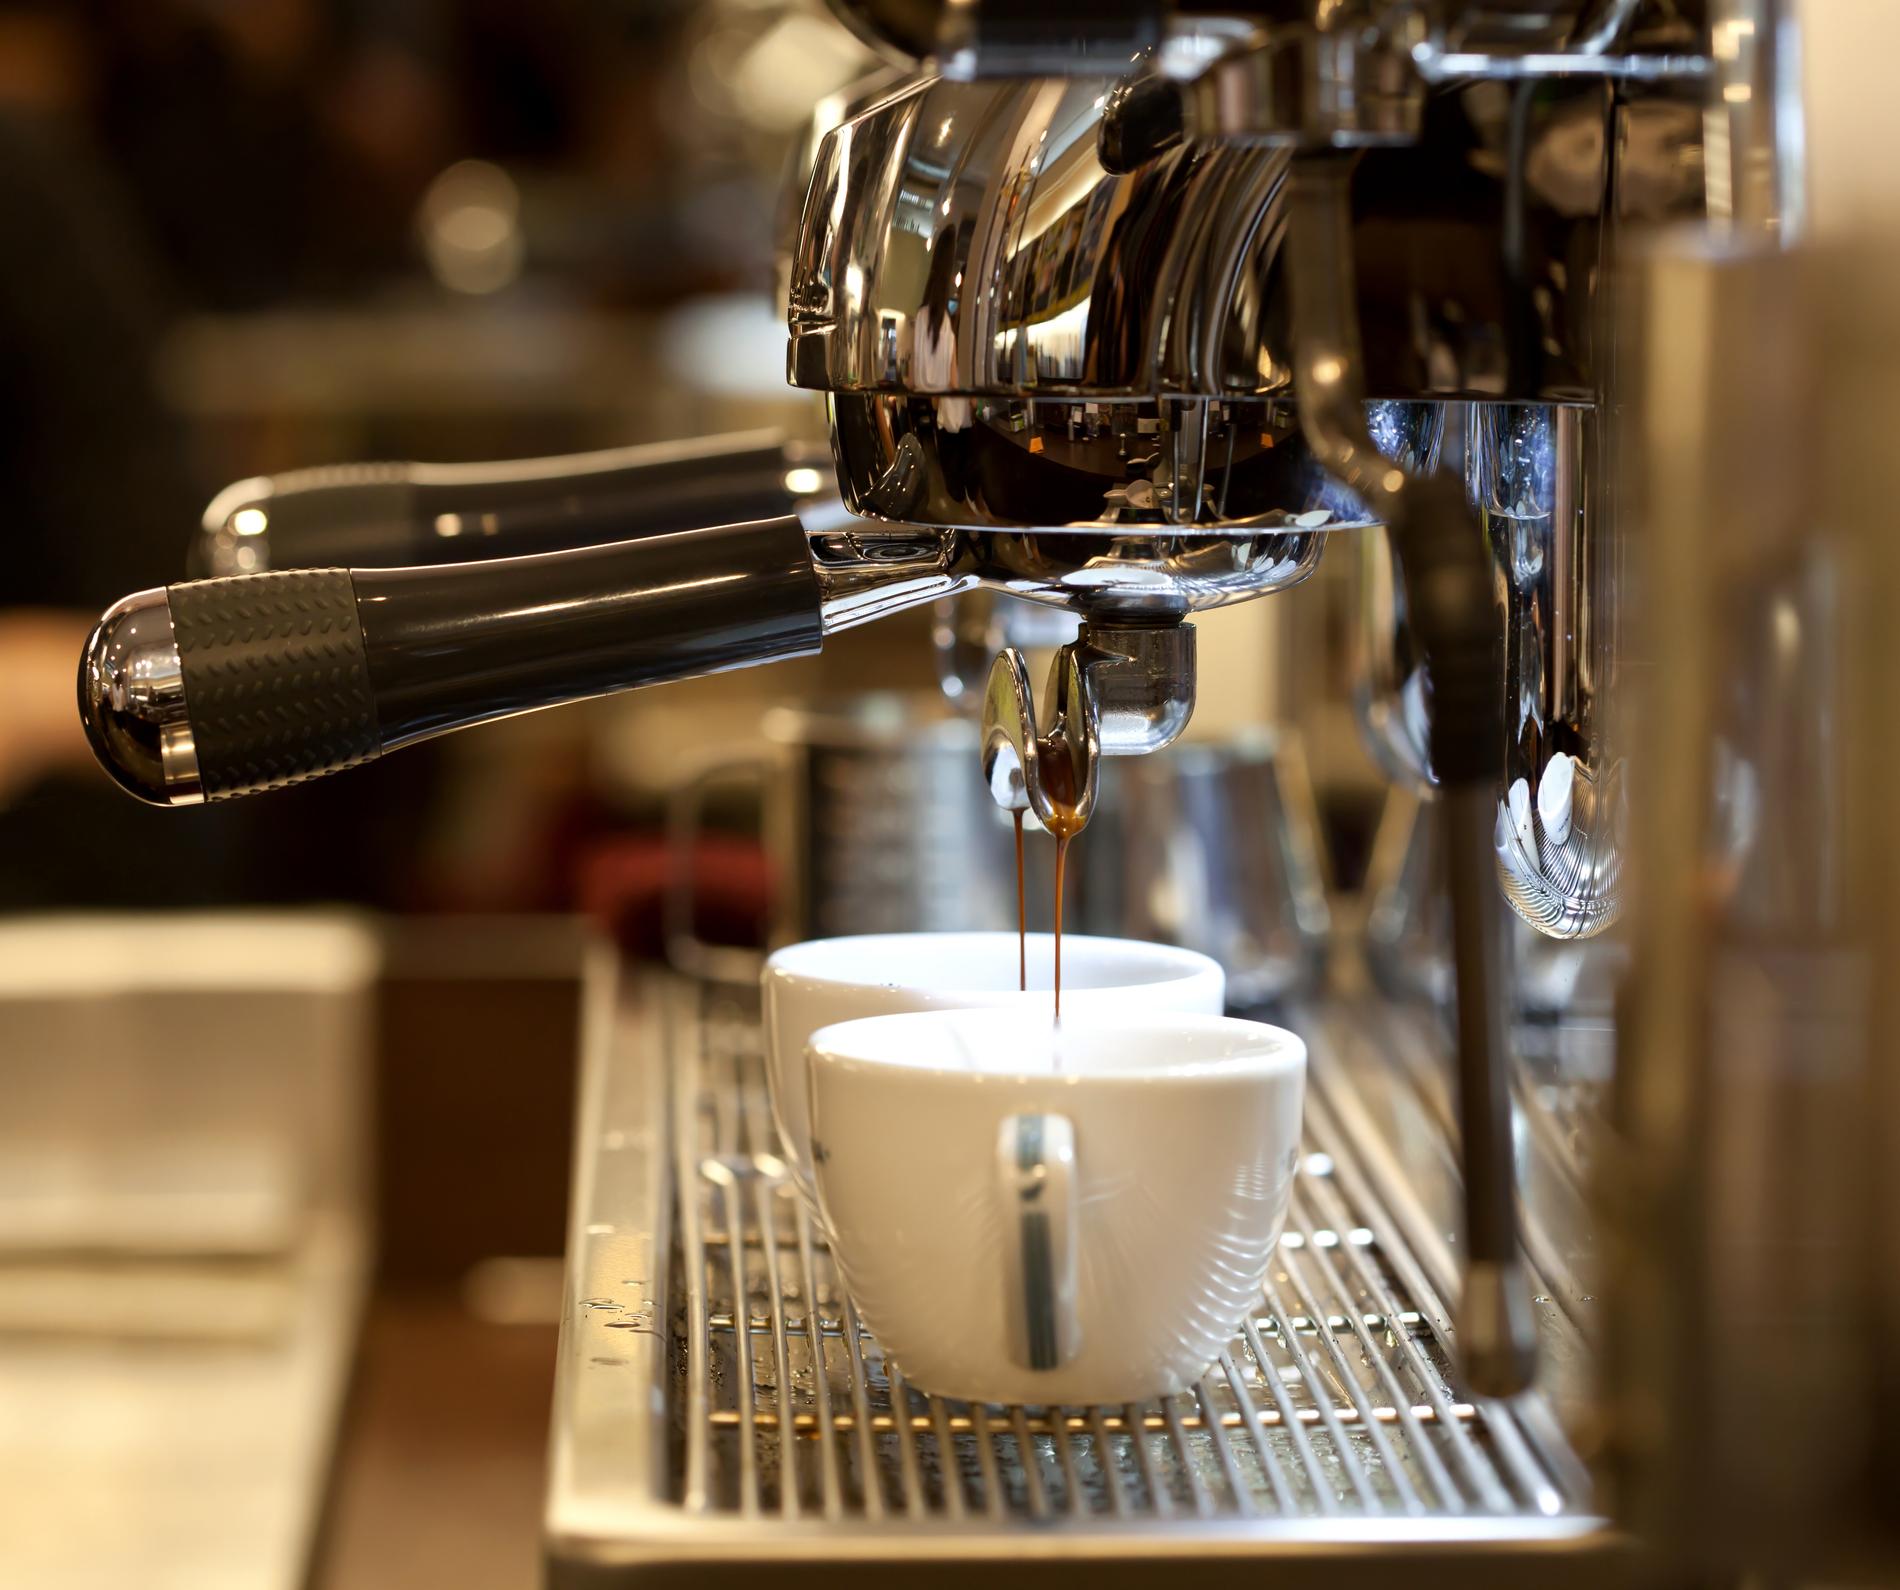 Vi bare elsker kaffe, og drikker i snitt 4 kopper hver, hver dag, ifølge Gøystdal.